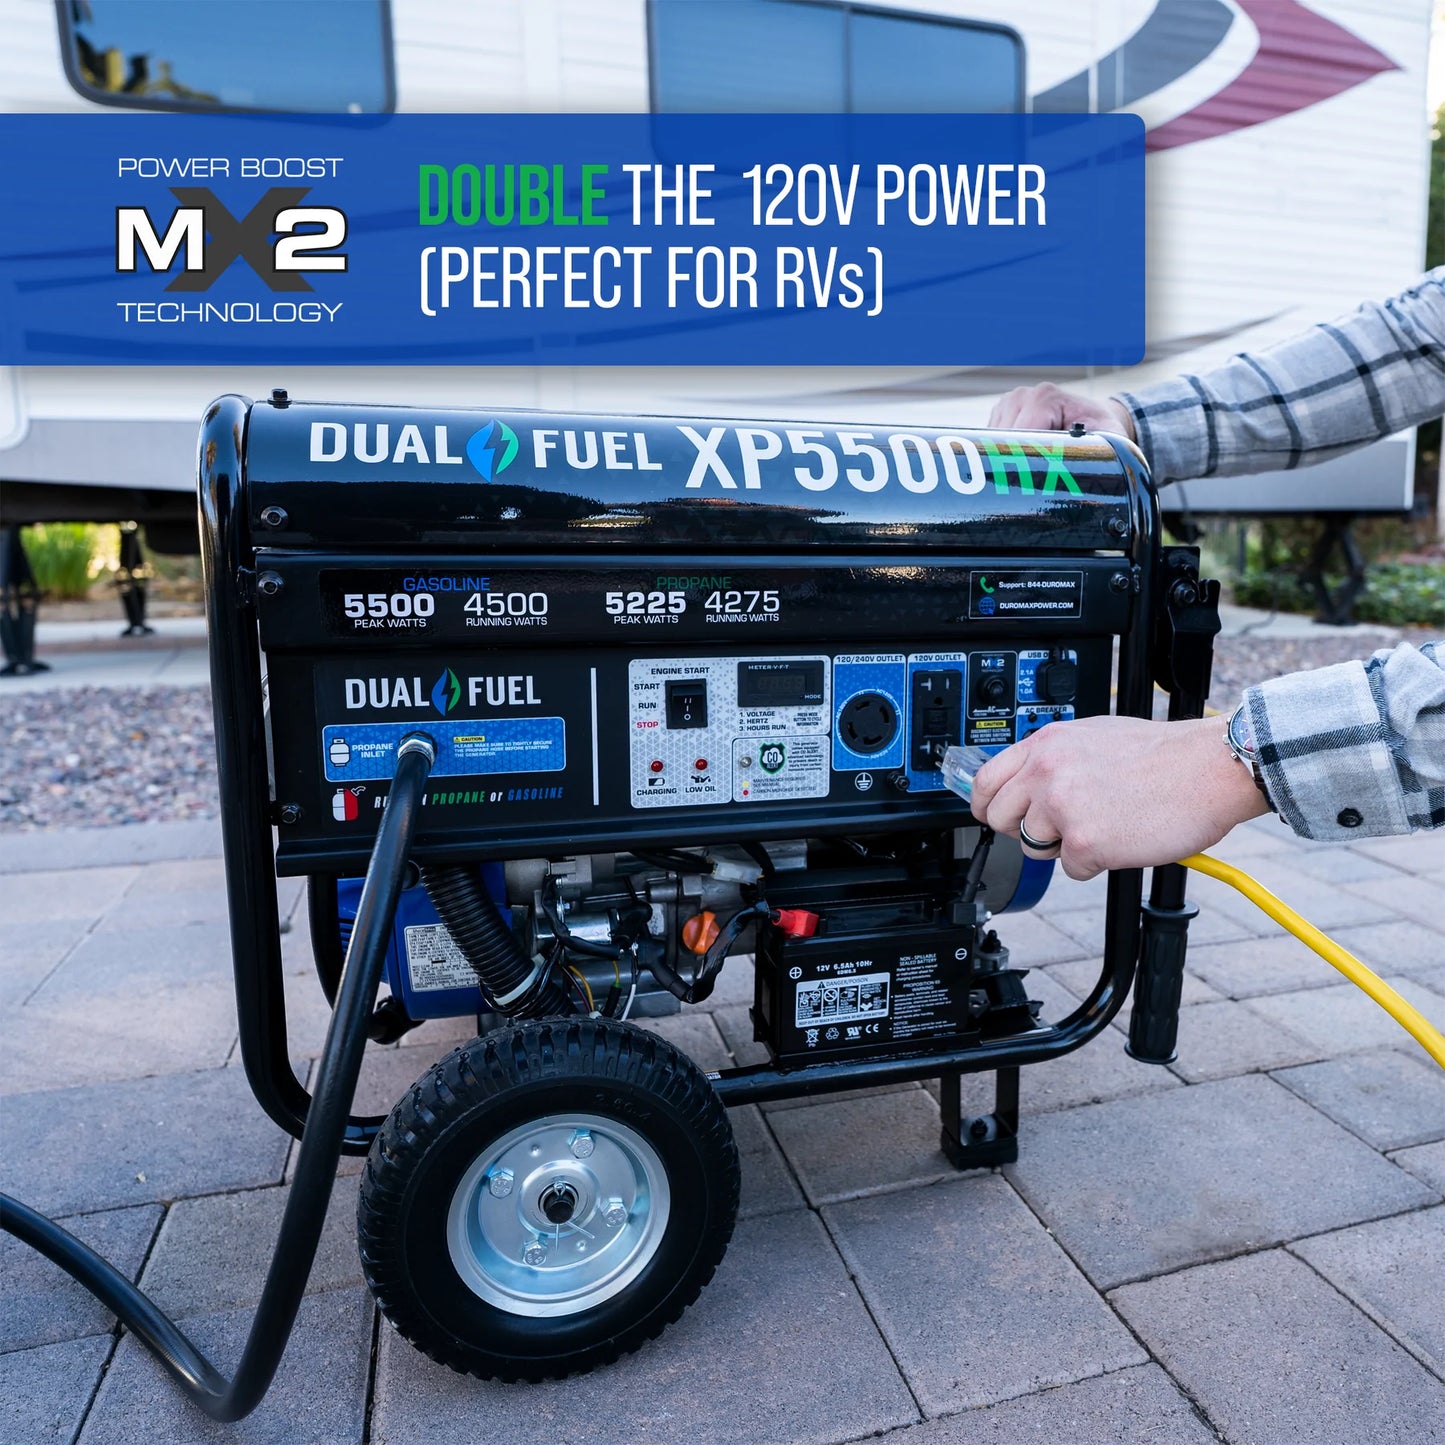 DuroMax XP5500HX 5,500 Watt Dual Fuel Portable HX Generator w/ CO Alert